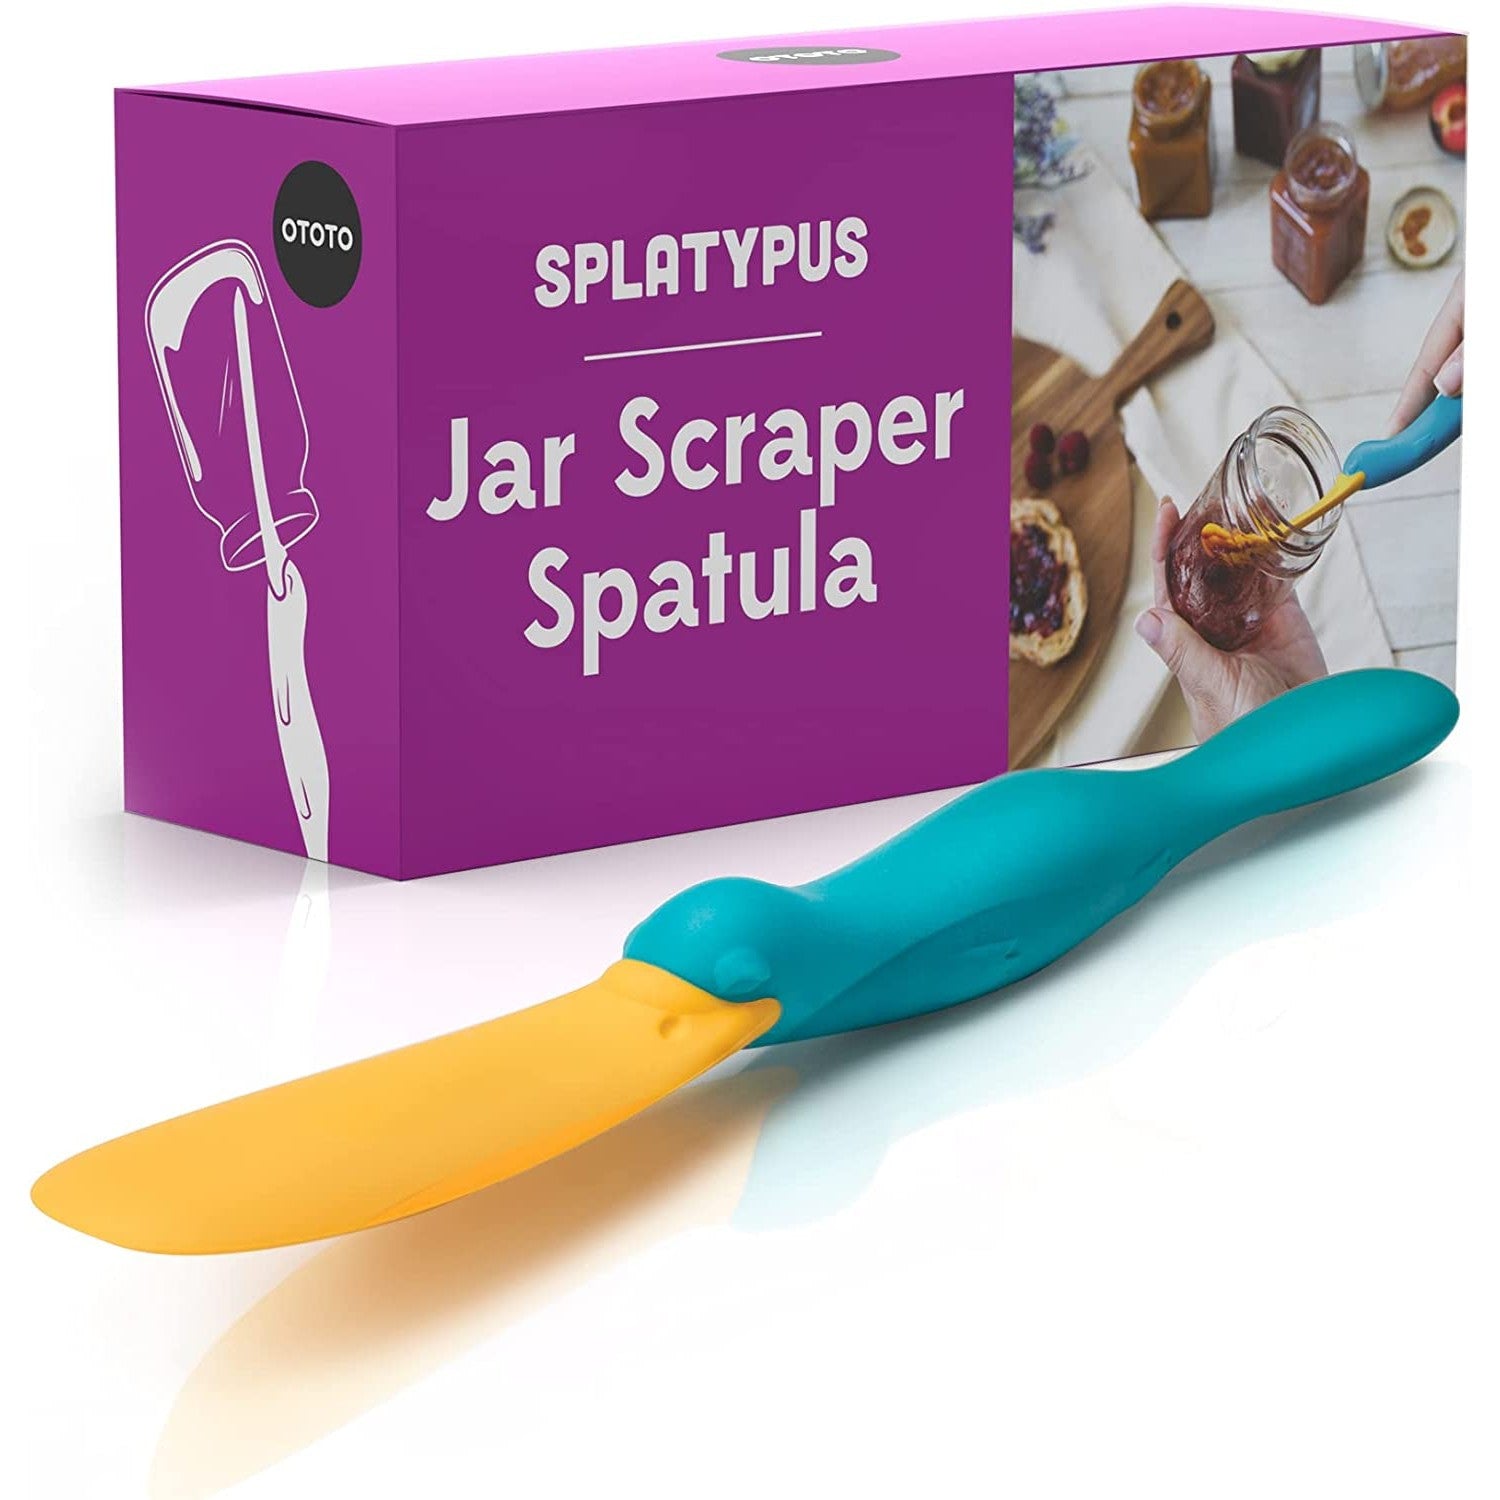 A kitchen scraper spatula called Splatypus.